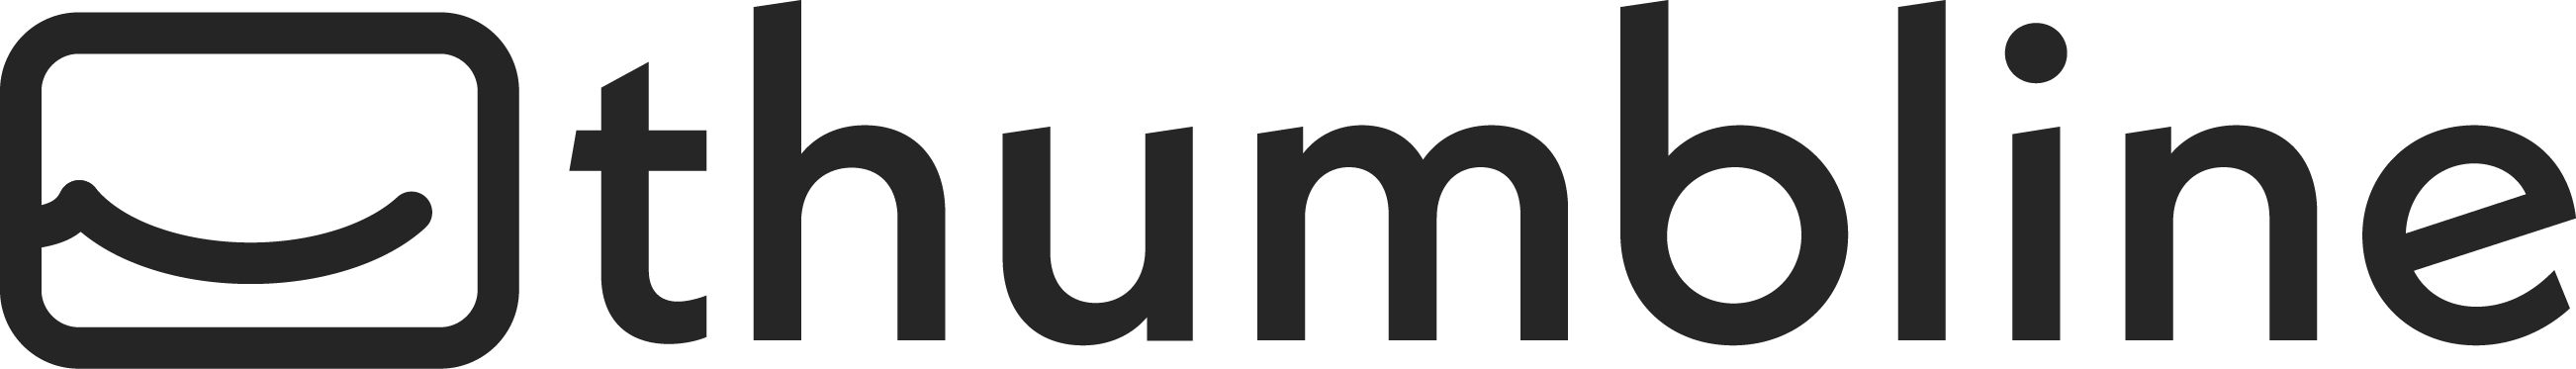 Thumbline logo   no buffer